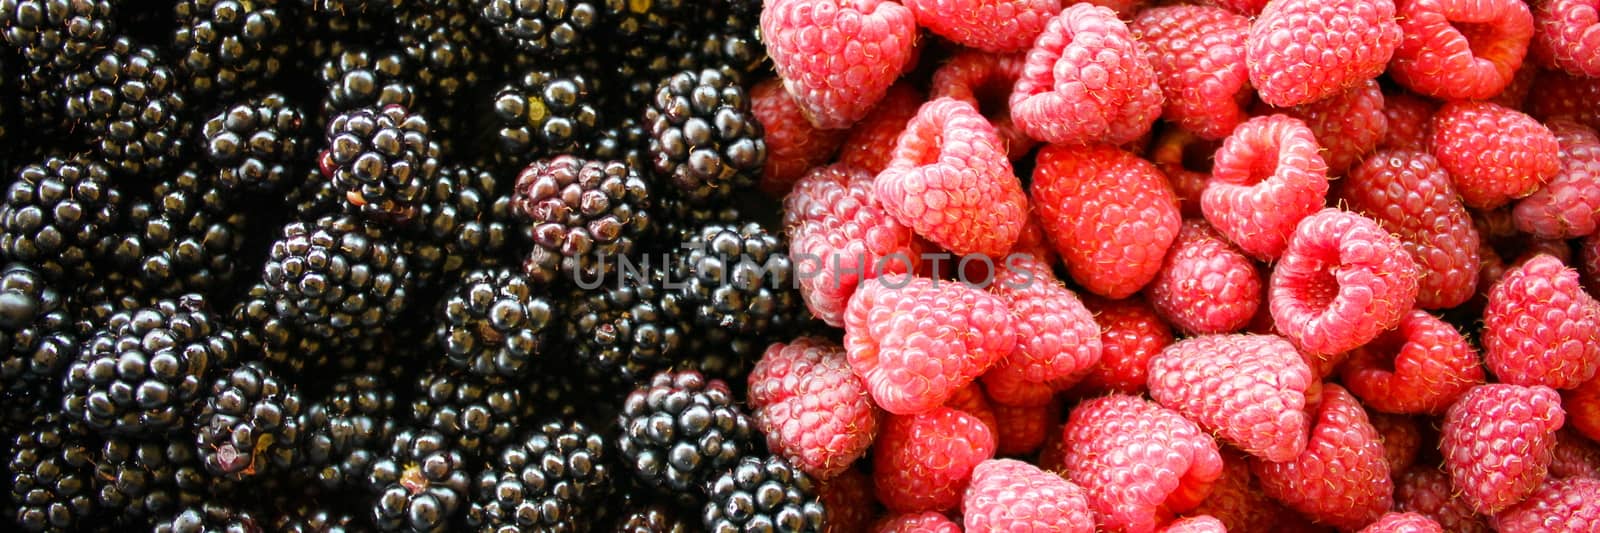 Banner of the blackberries and raspberries. Left side of blackberries, and right side raspberries. by mahirrov